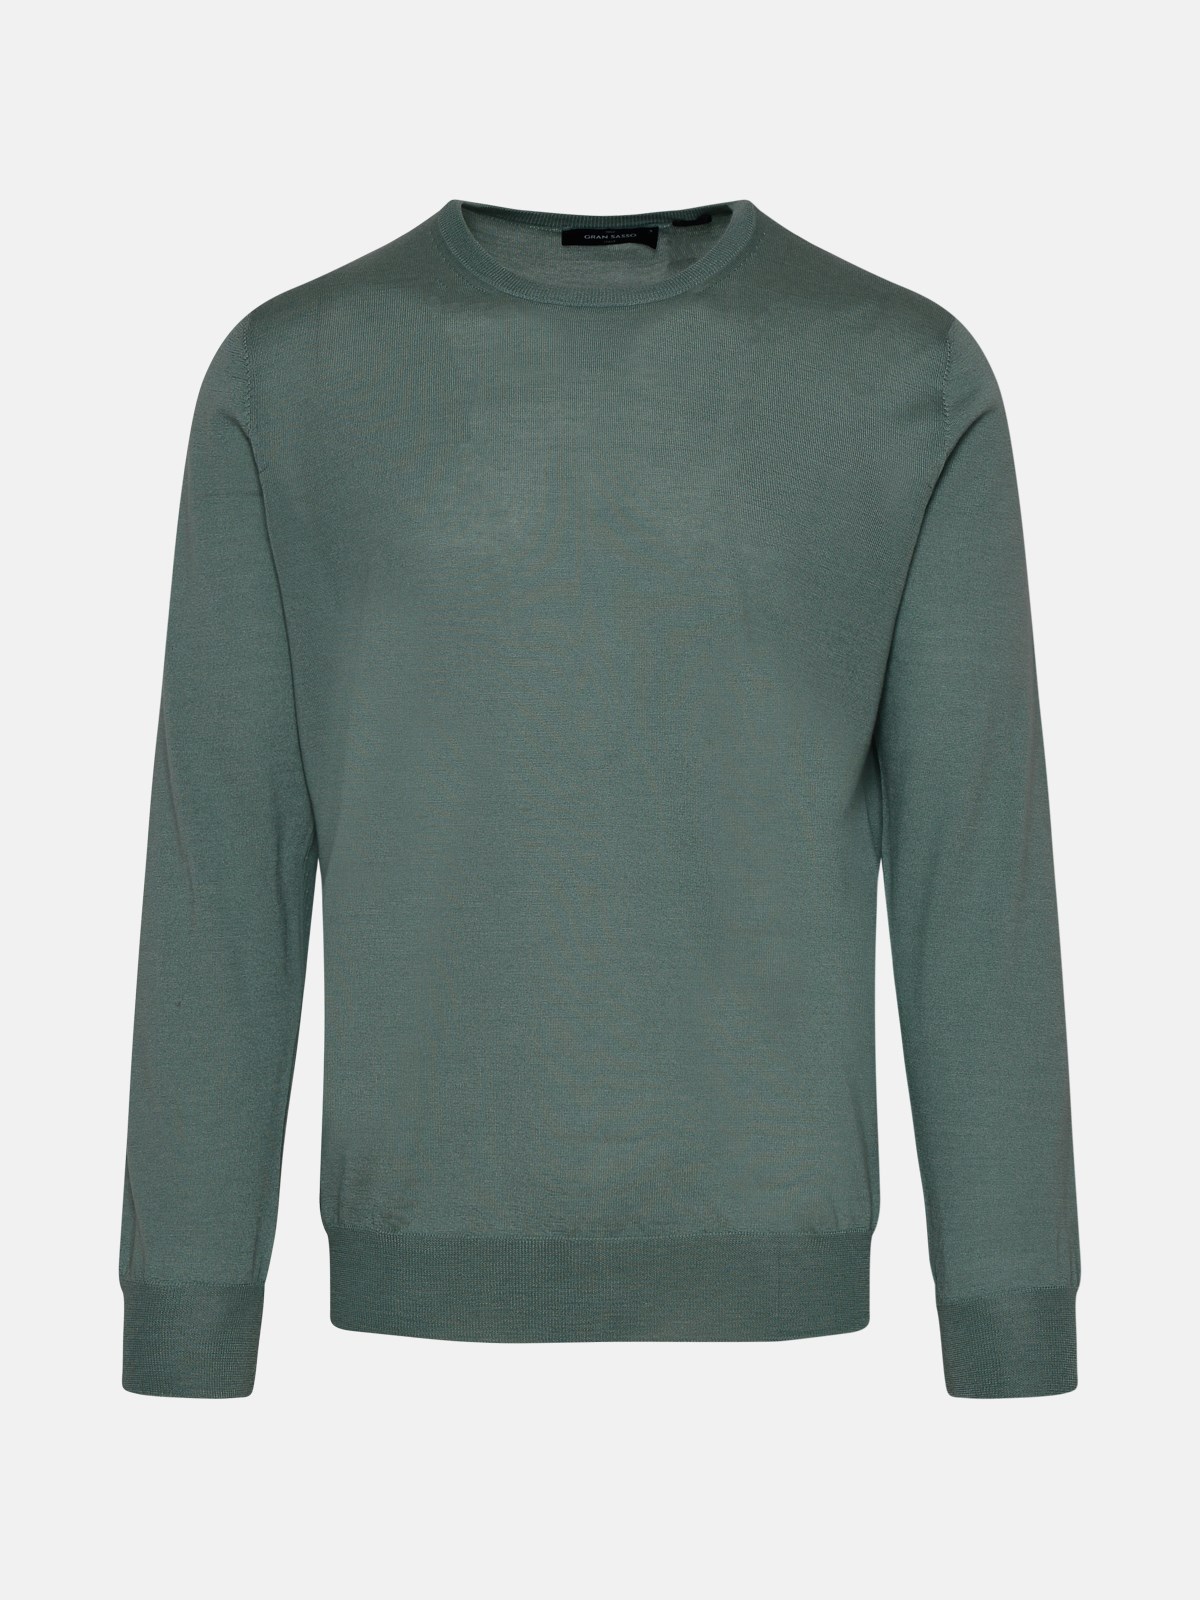 Gran Sasso Green Cashmere Blend Sweater